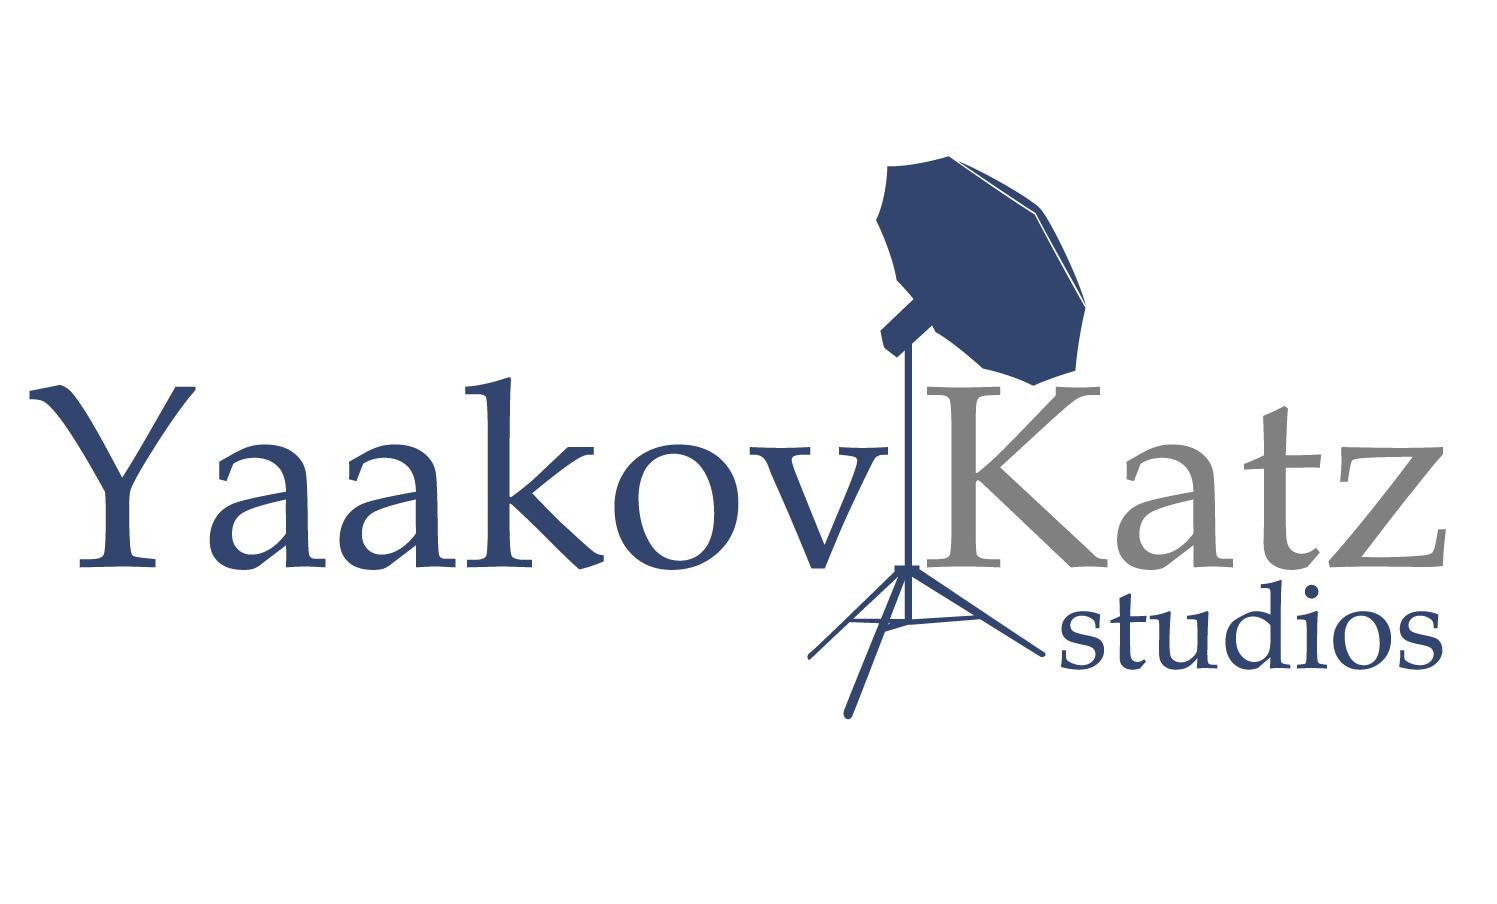 Yaakov Katz Studios